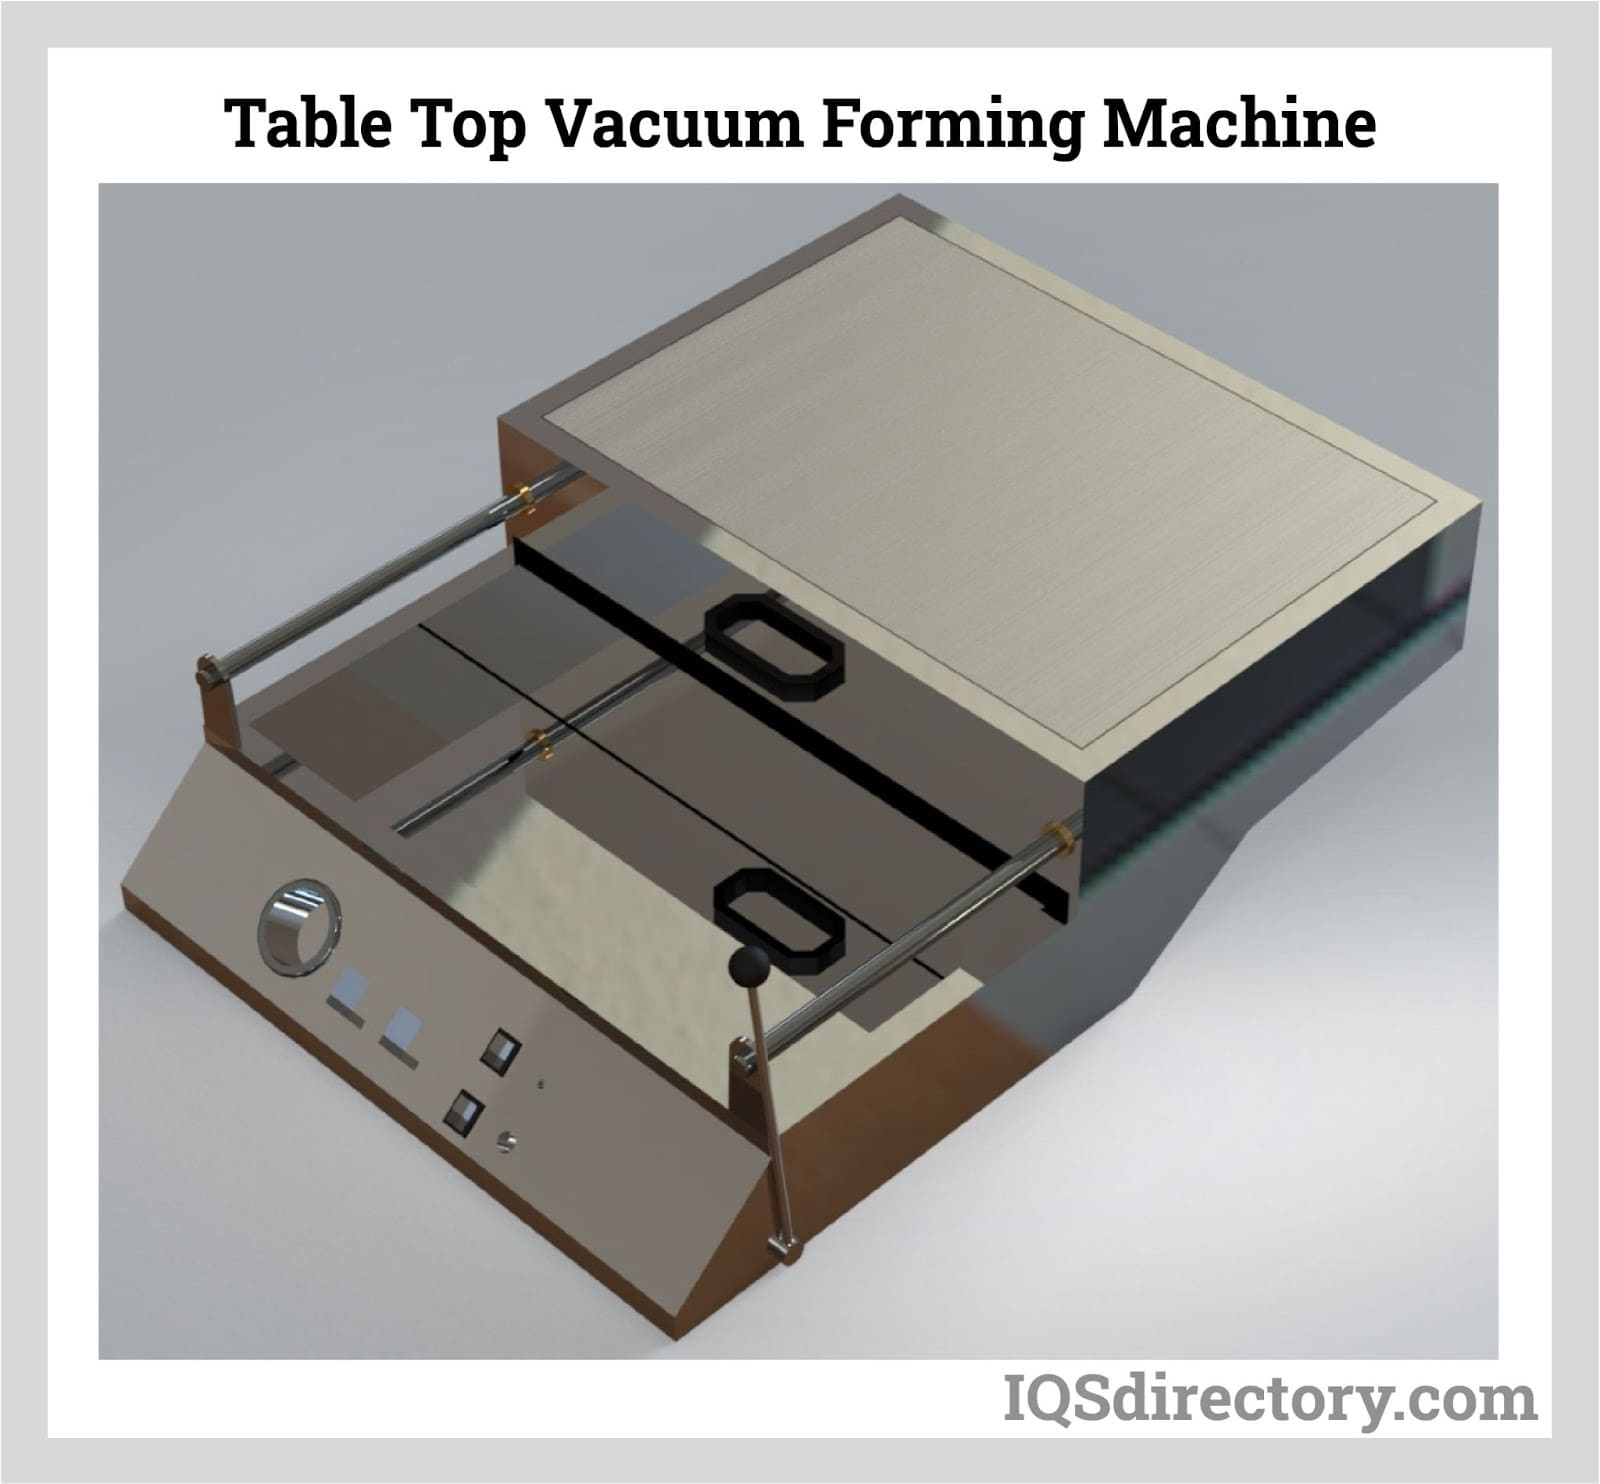 Table Top Vacuum Forming Machine